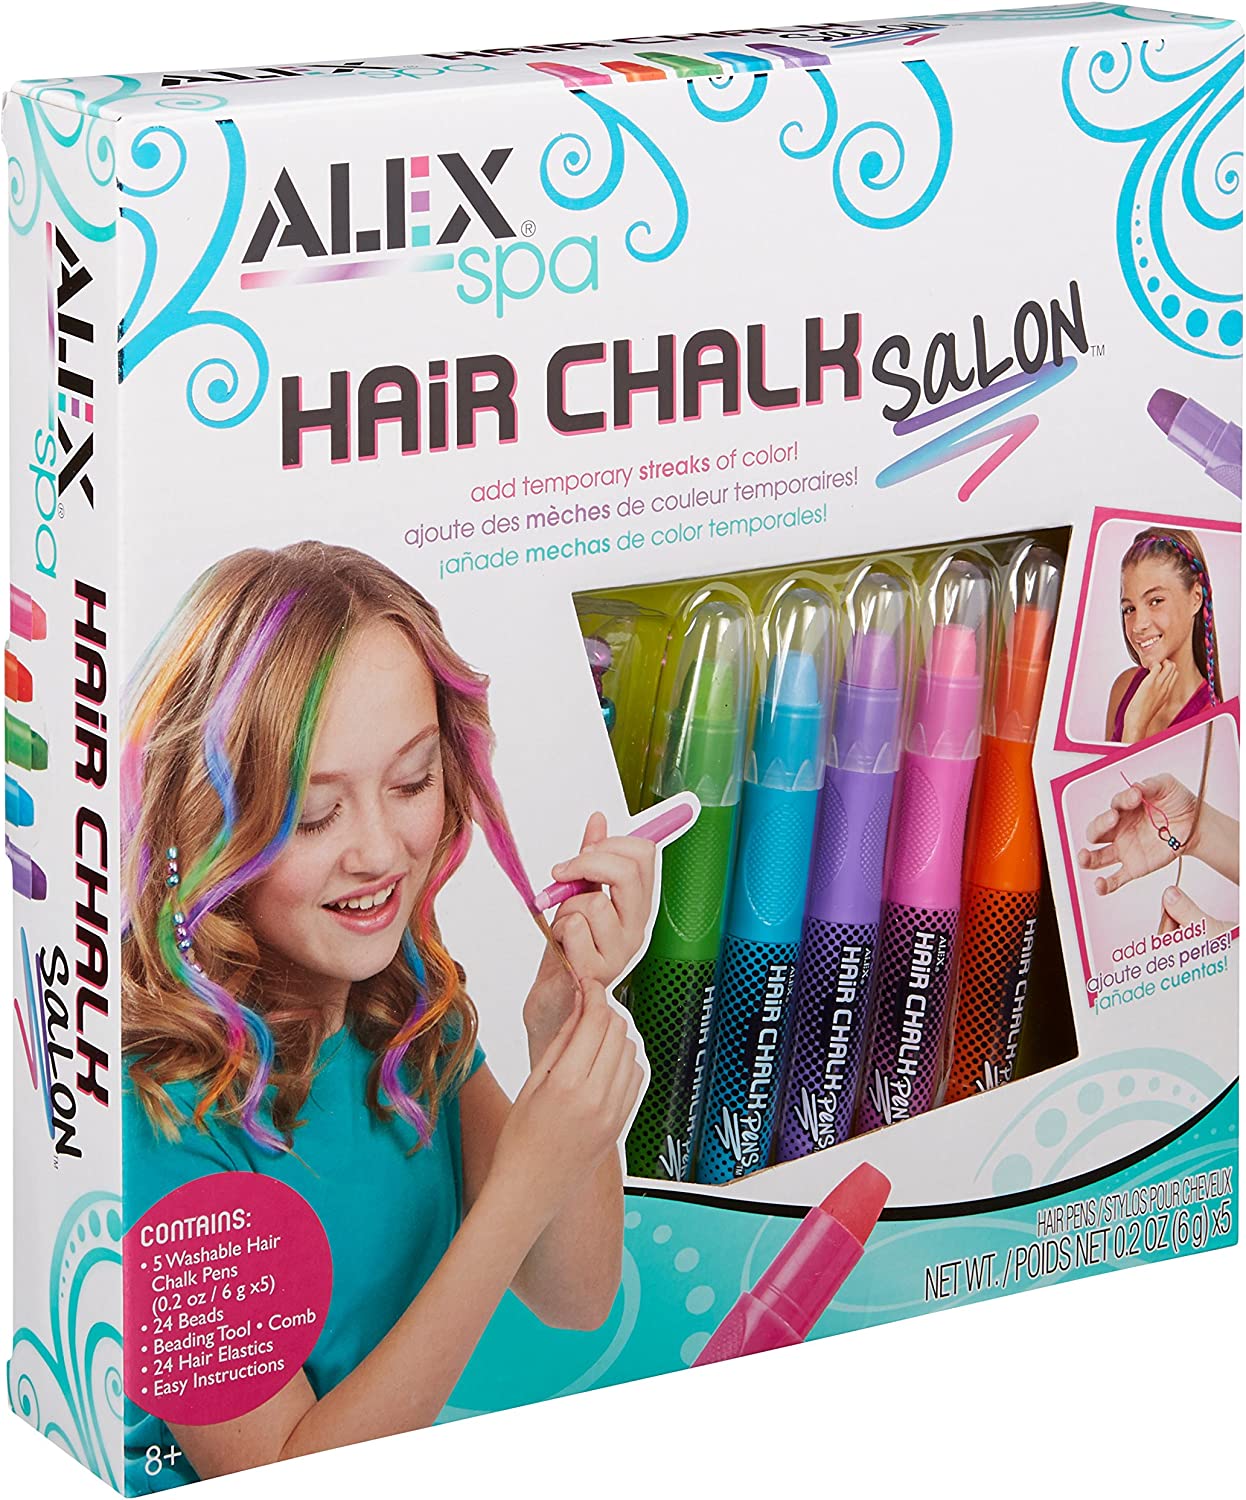 https://www.dontwasteyourmoney.com/wp-content/uploads/2022/10/alex-toys-metallic-beads-hair-chalk-set-hair-chalk-sets.jpg